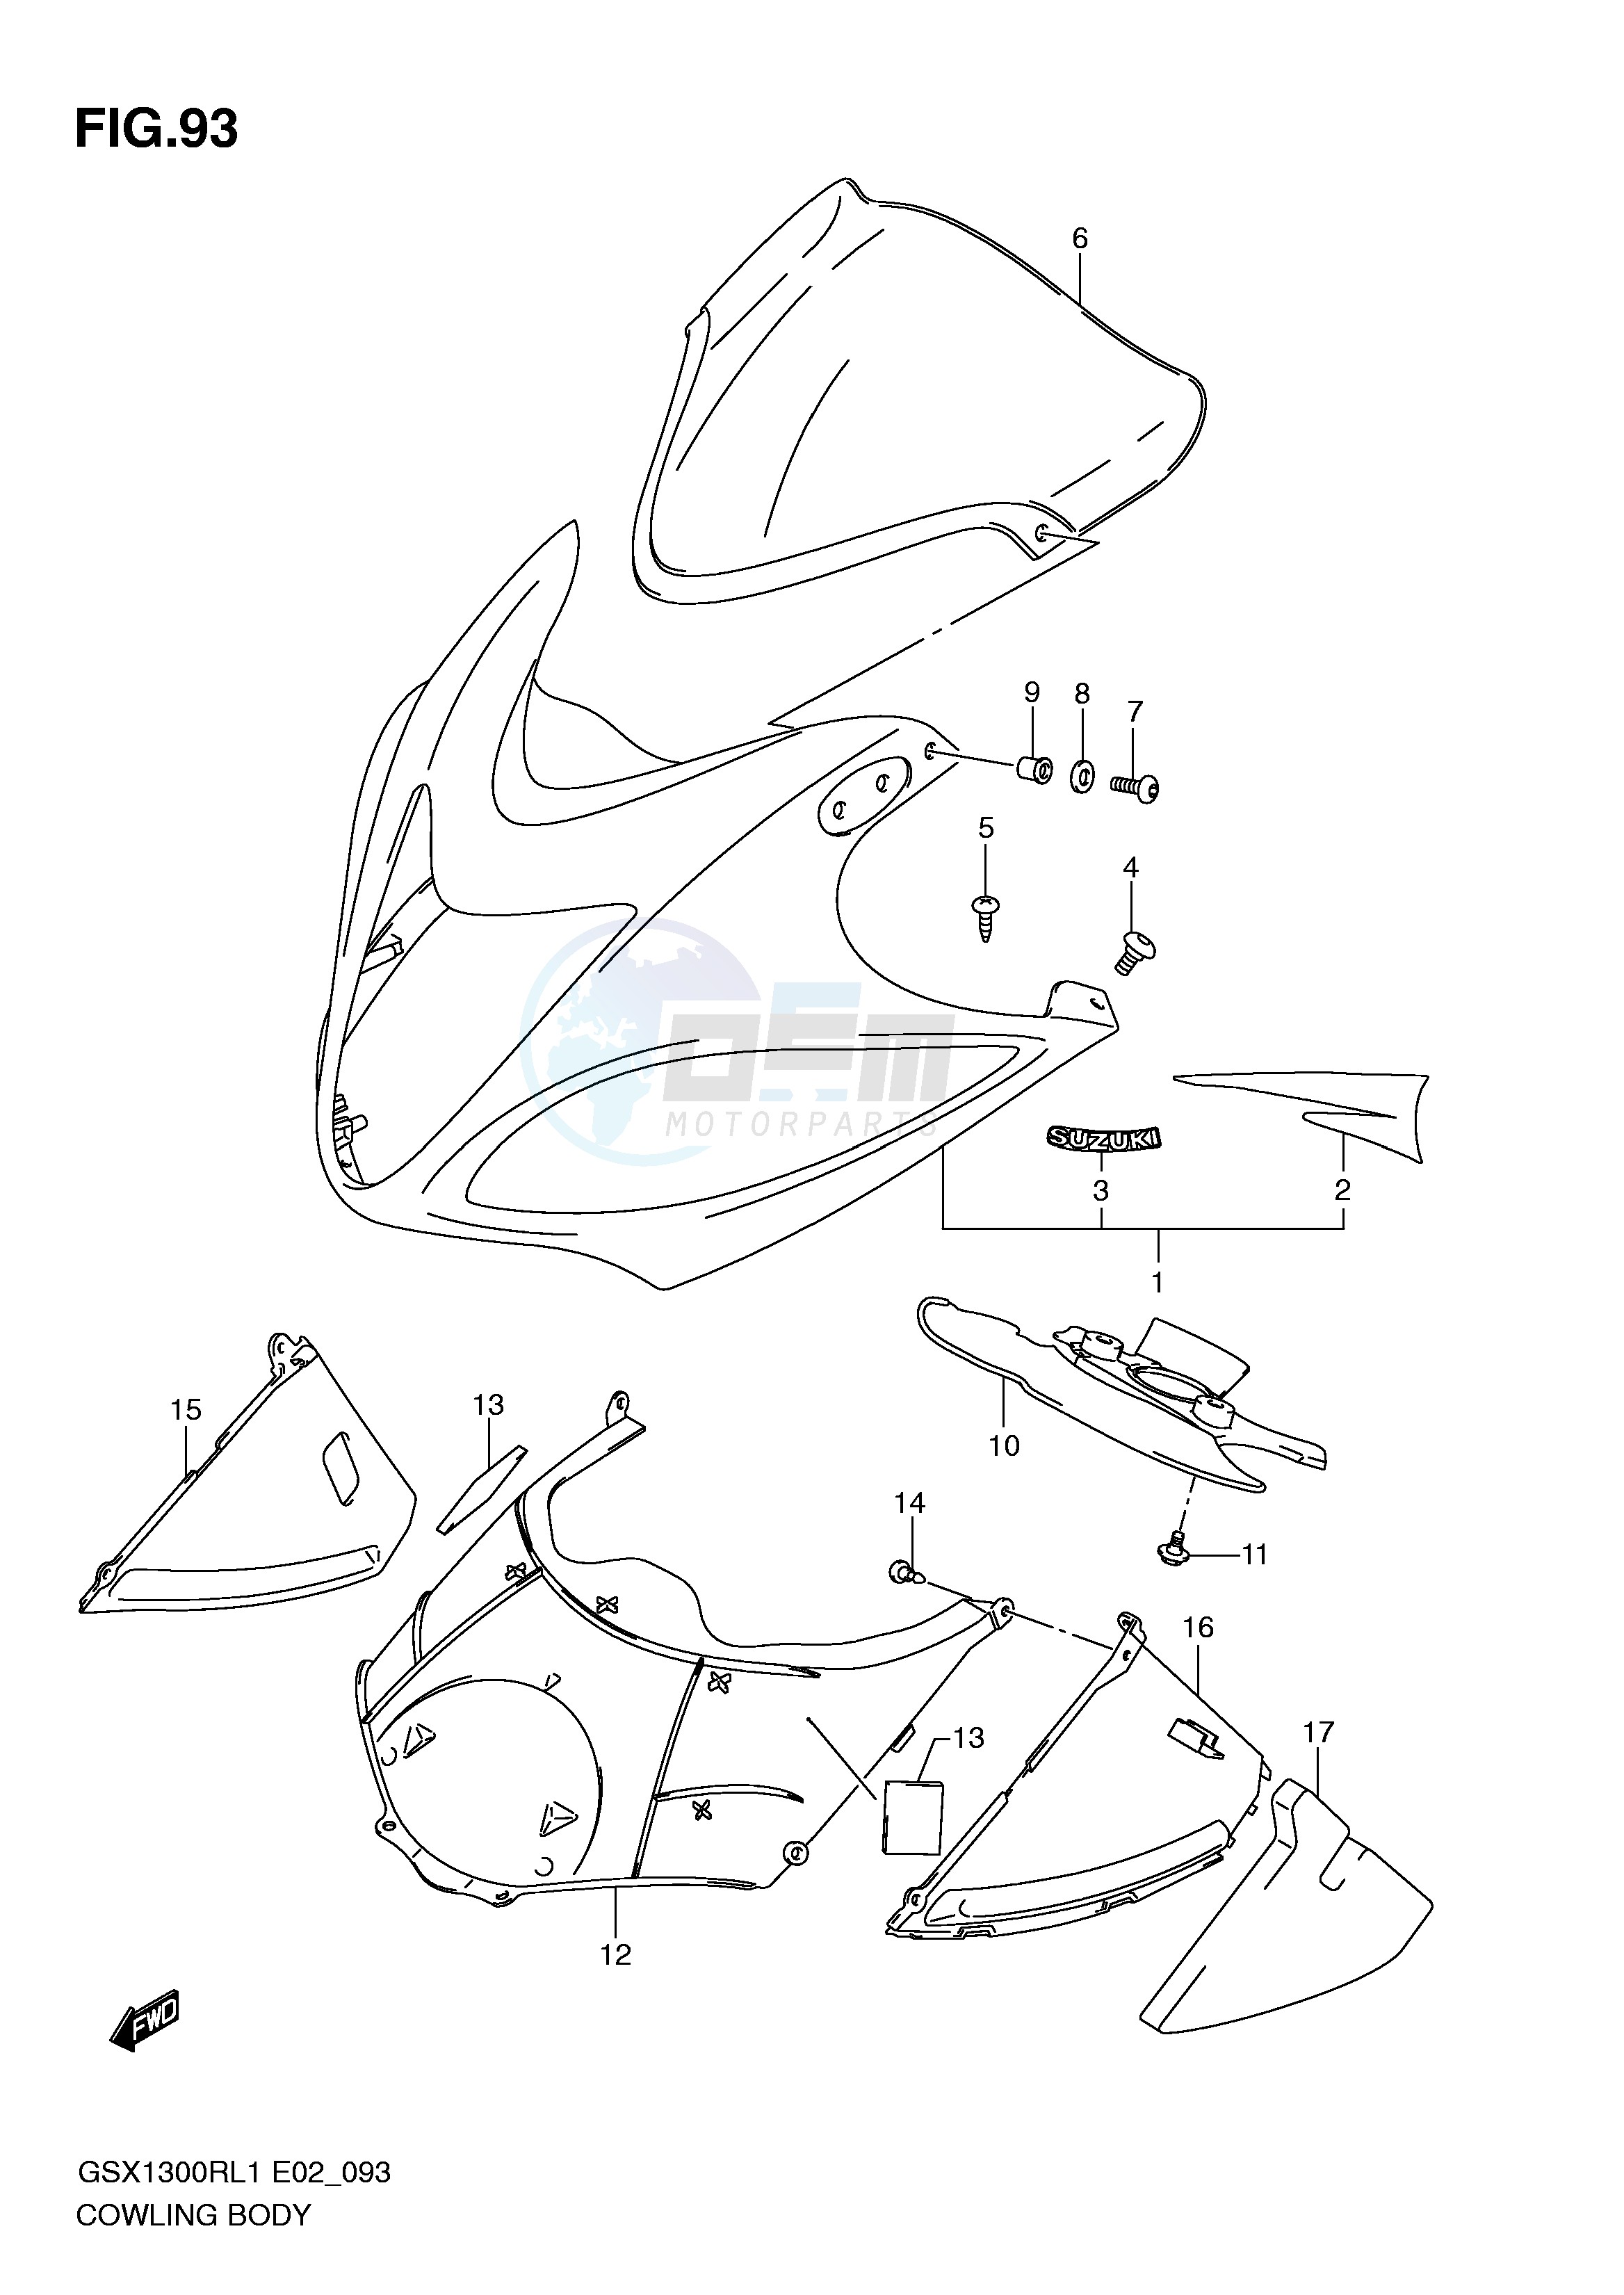 COWLING BODY (GSX1300RL1 E2) blueprint